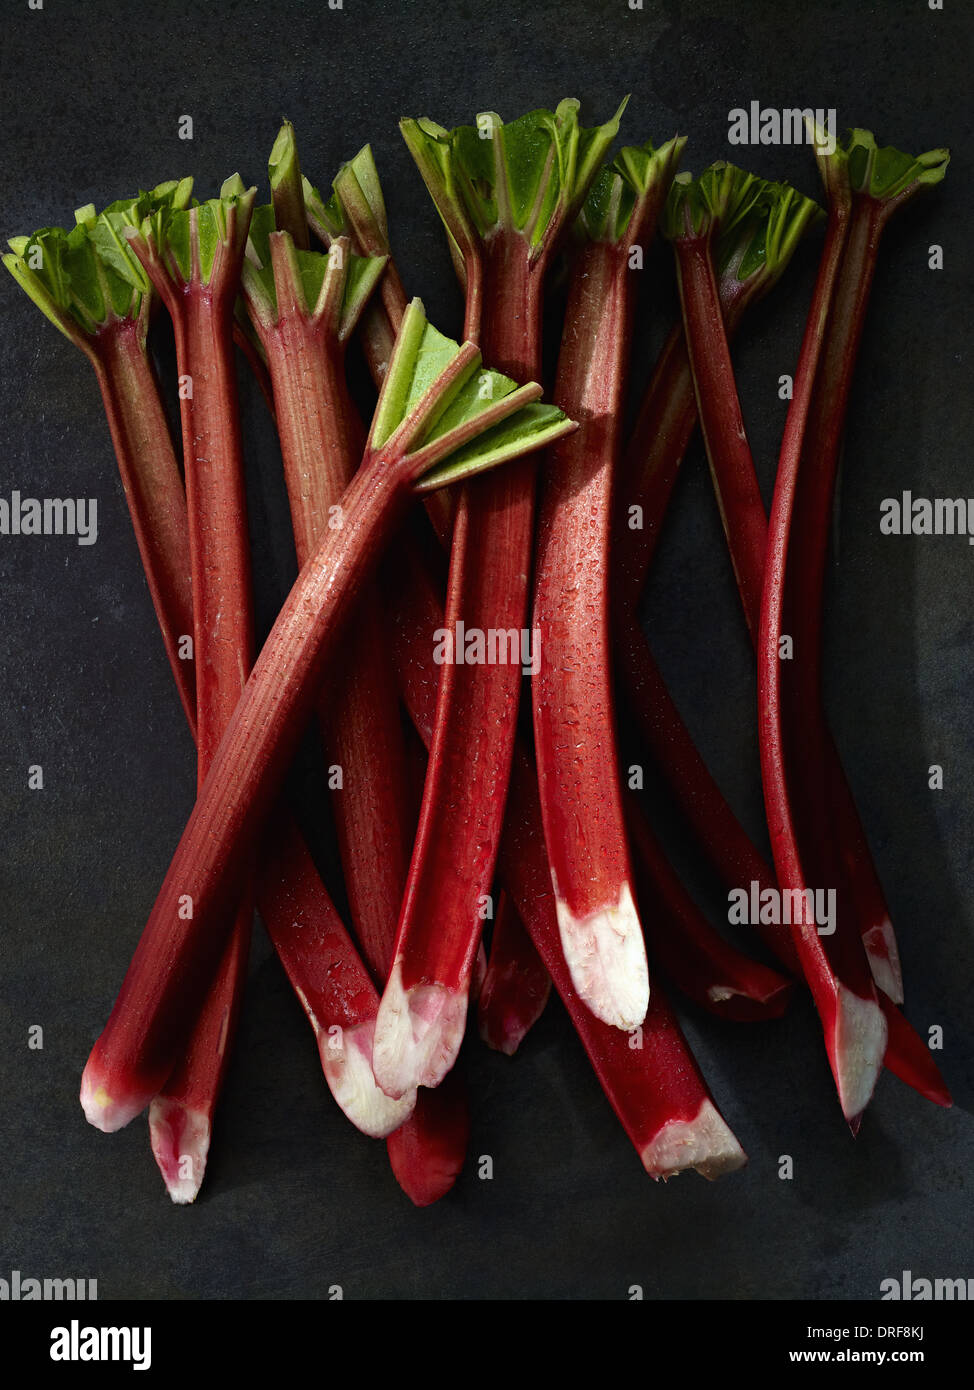 Maryland USA Sticks of fresh rhubarb with long pink stems Stock Photo